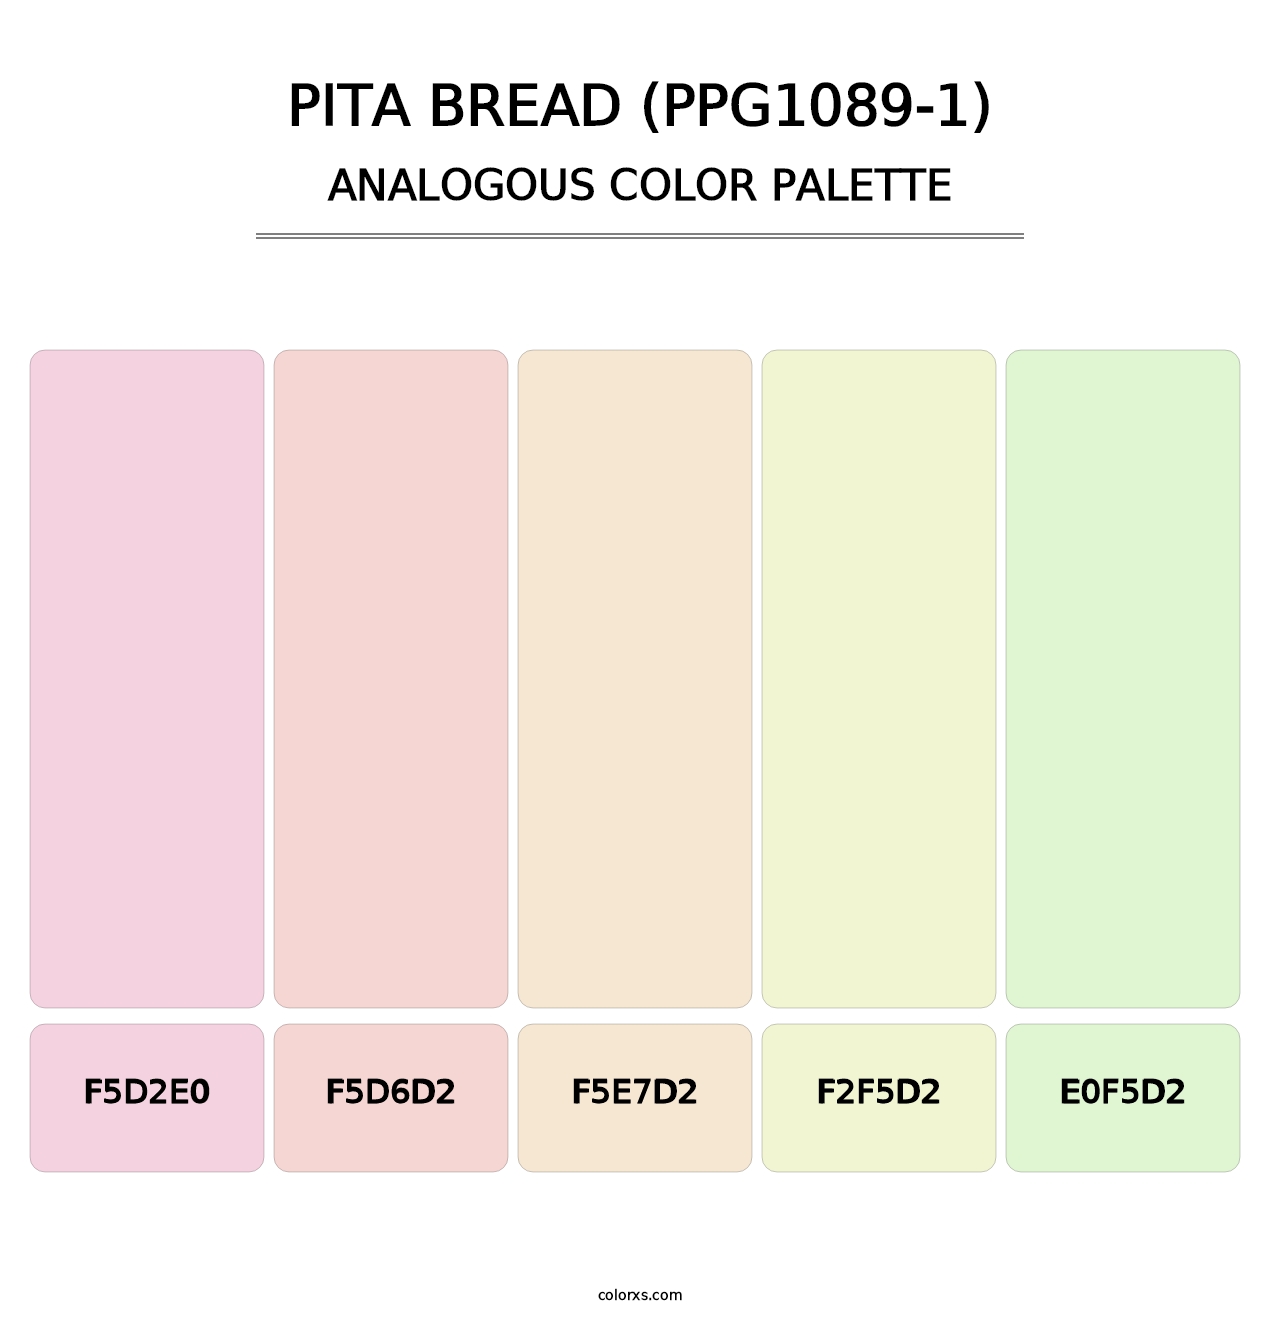 Pita Bread (PPG1089-1) - Analogous Color Palette